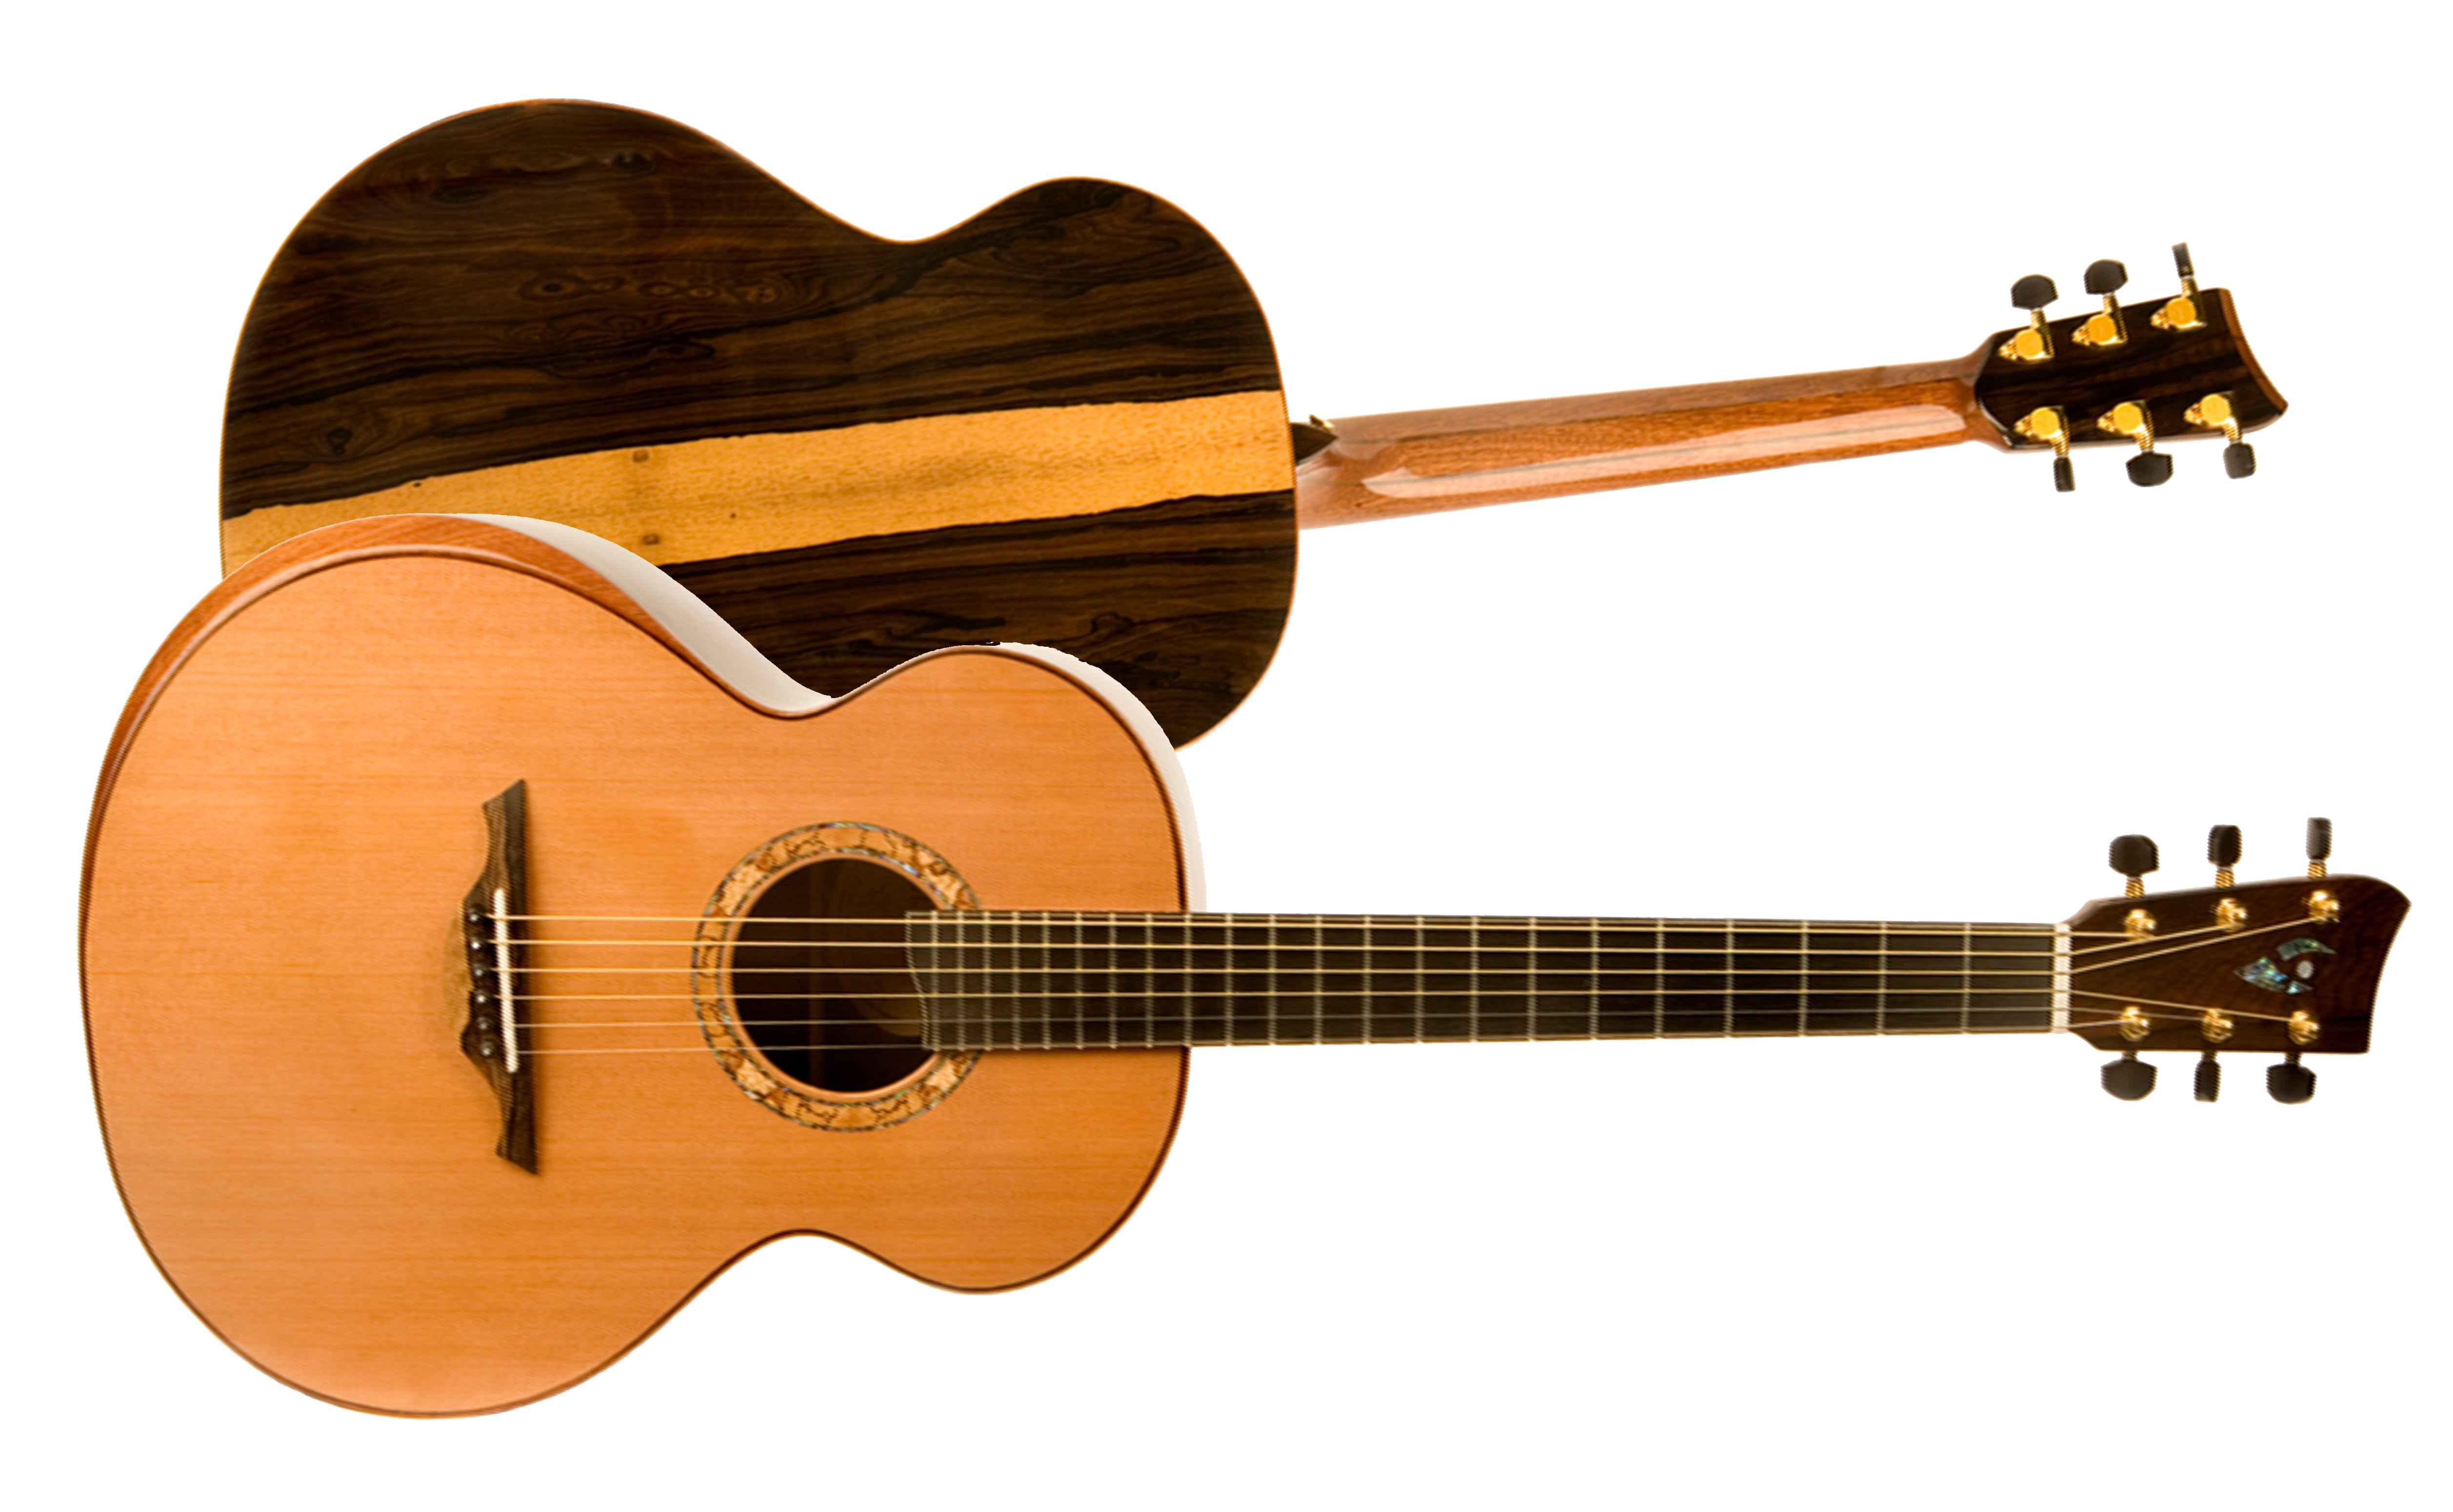 Lakestone SL Ziricote Fan Fret Custom, Acoustic Guitar for sale at Richards Guitars.